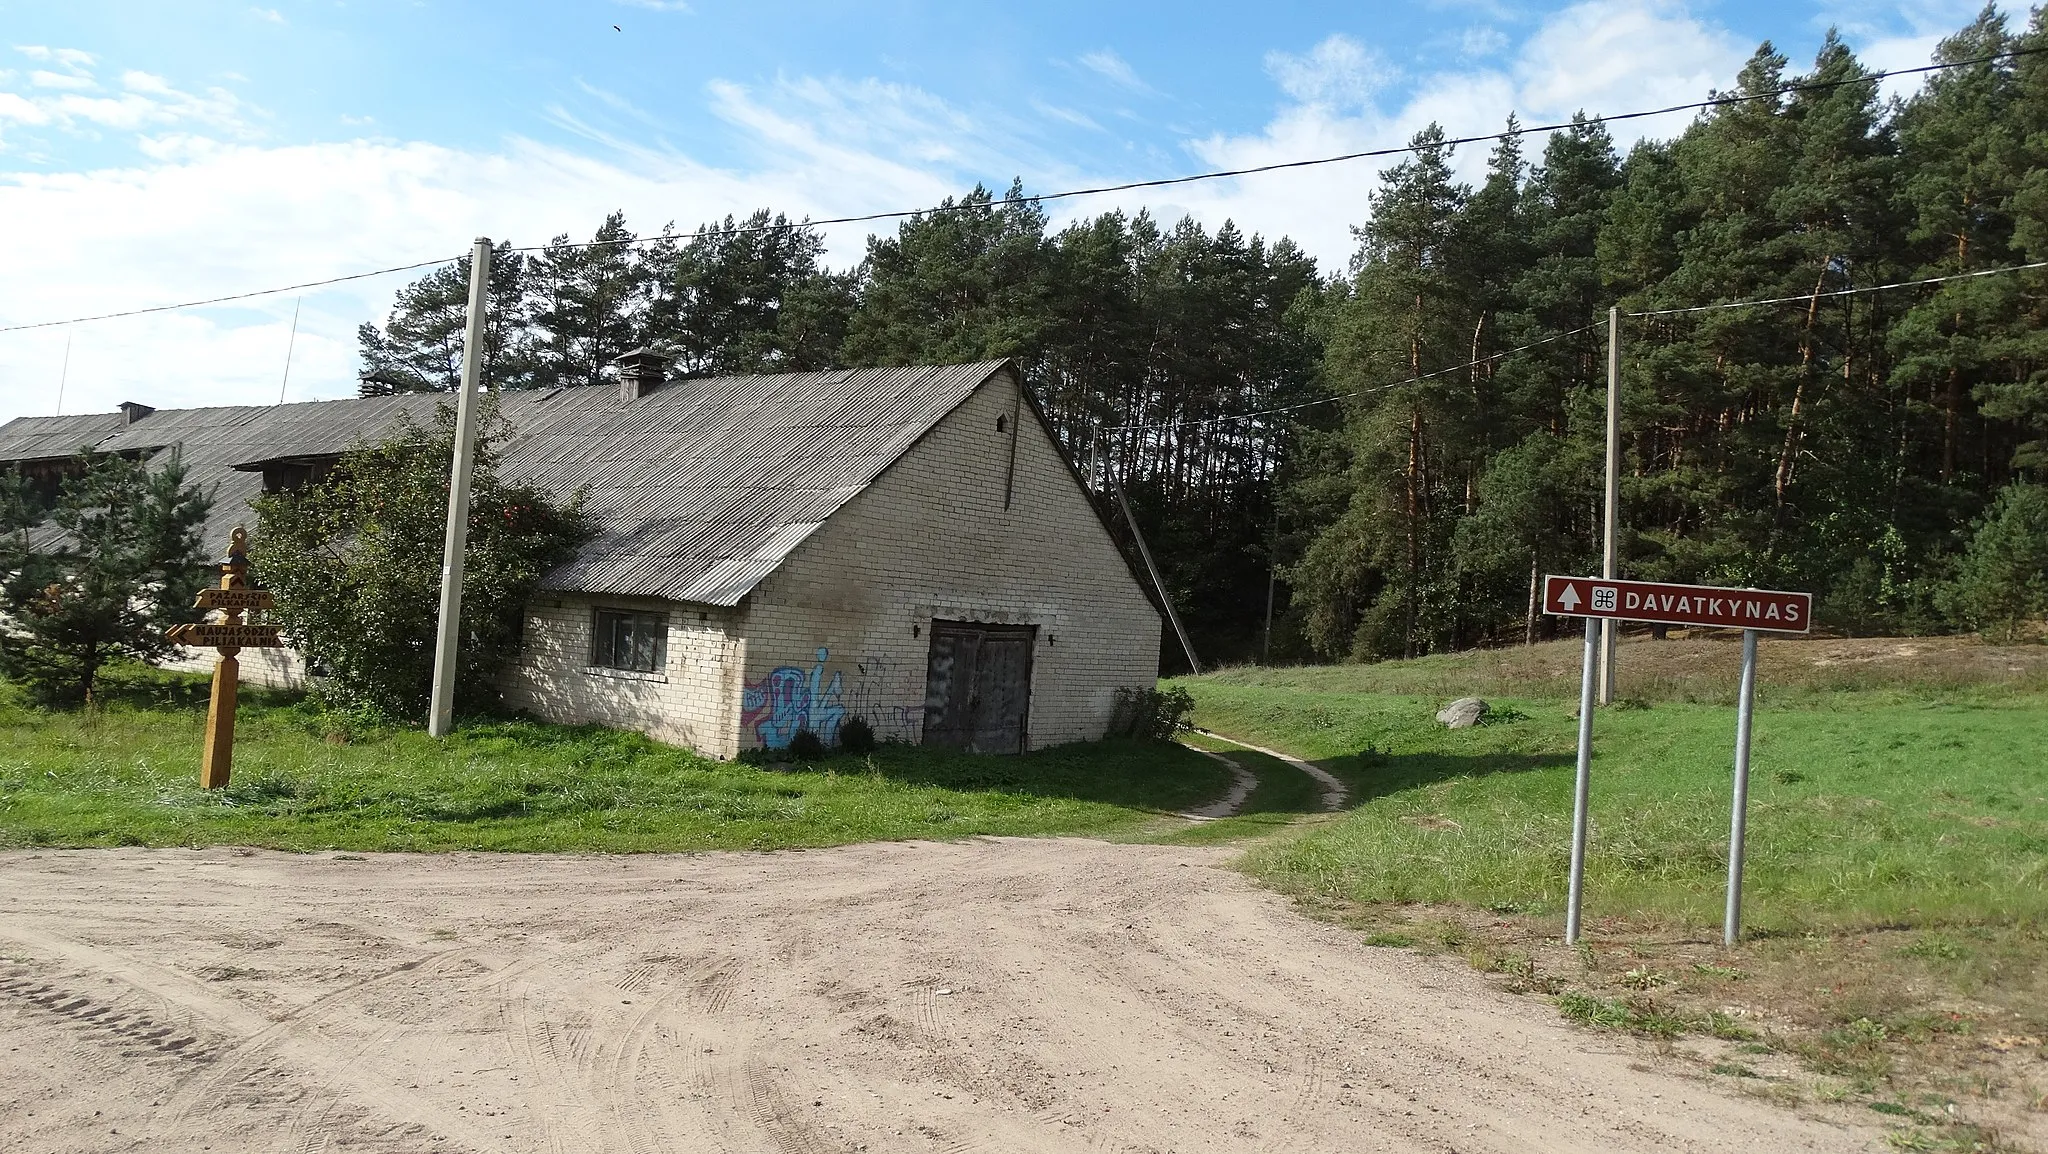 Photo showing: Davatkynas, Naujasodis, Prienai district, Lithuania